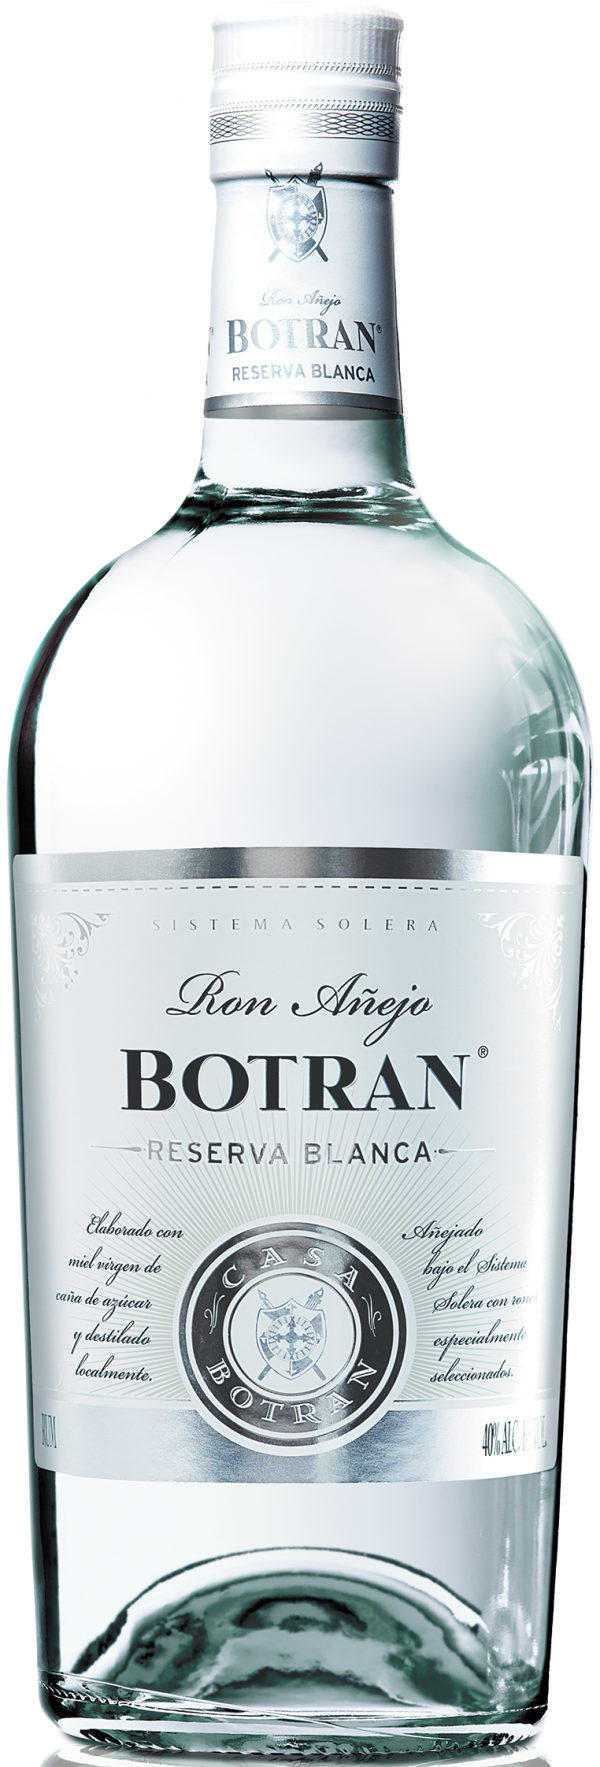 Zoom to enlarge the Ron Botran Rum • Blanca Reserva